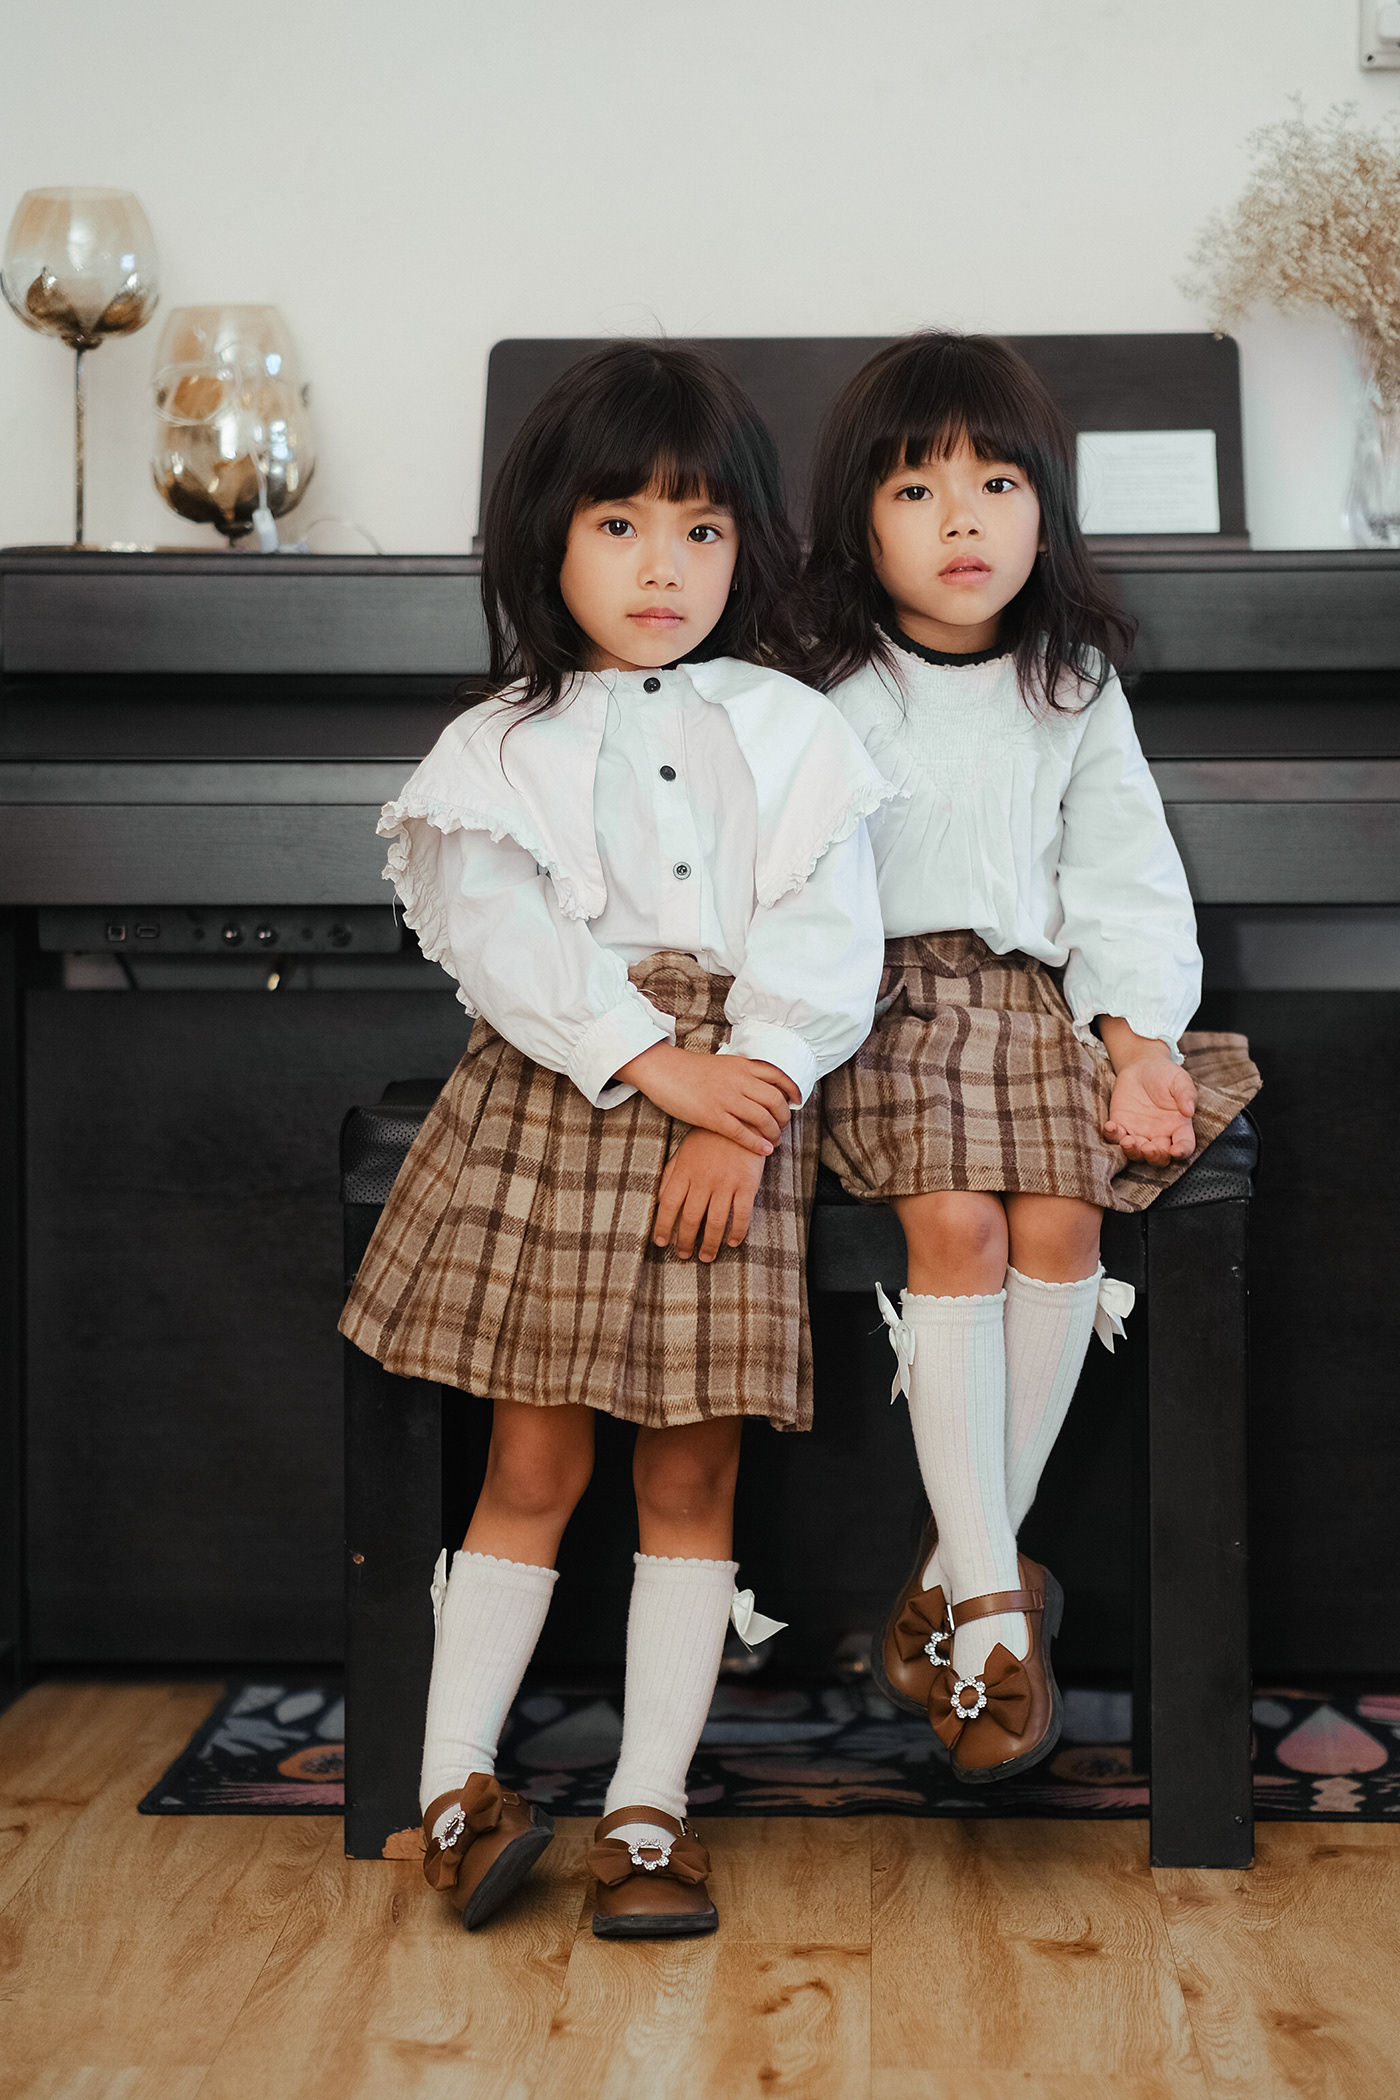 Twins girls identical photoshoot portrait